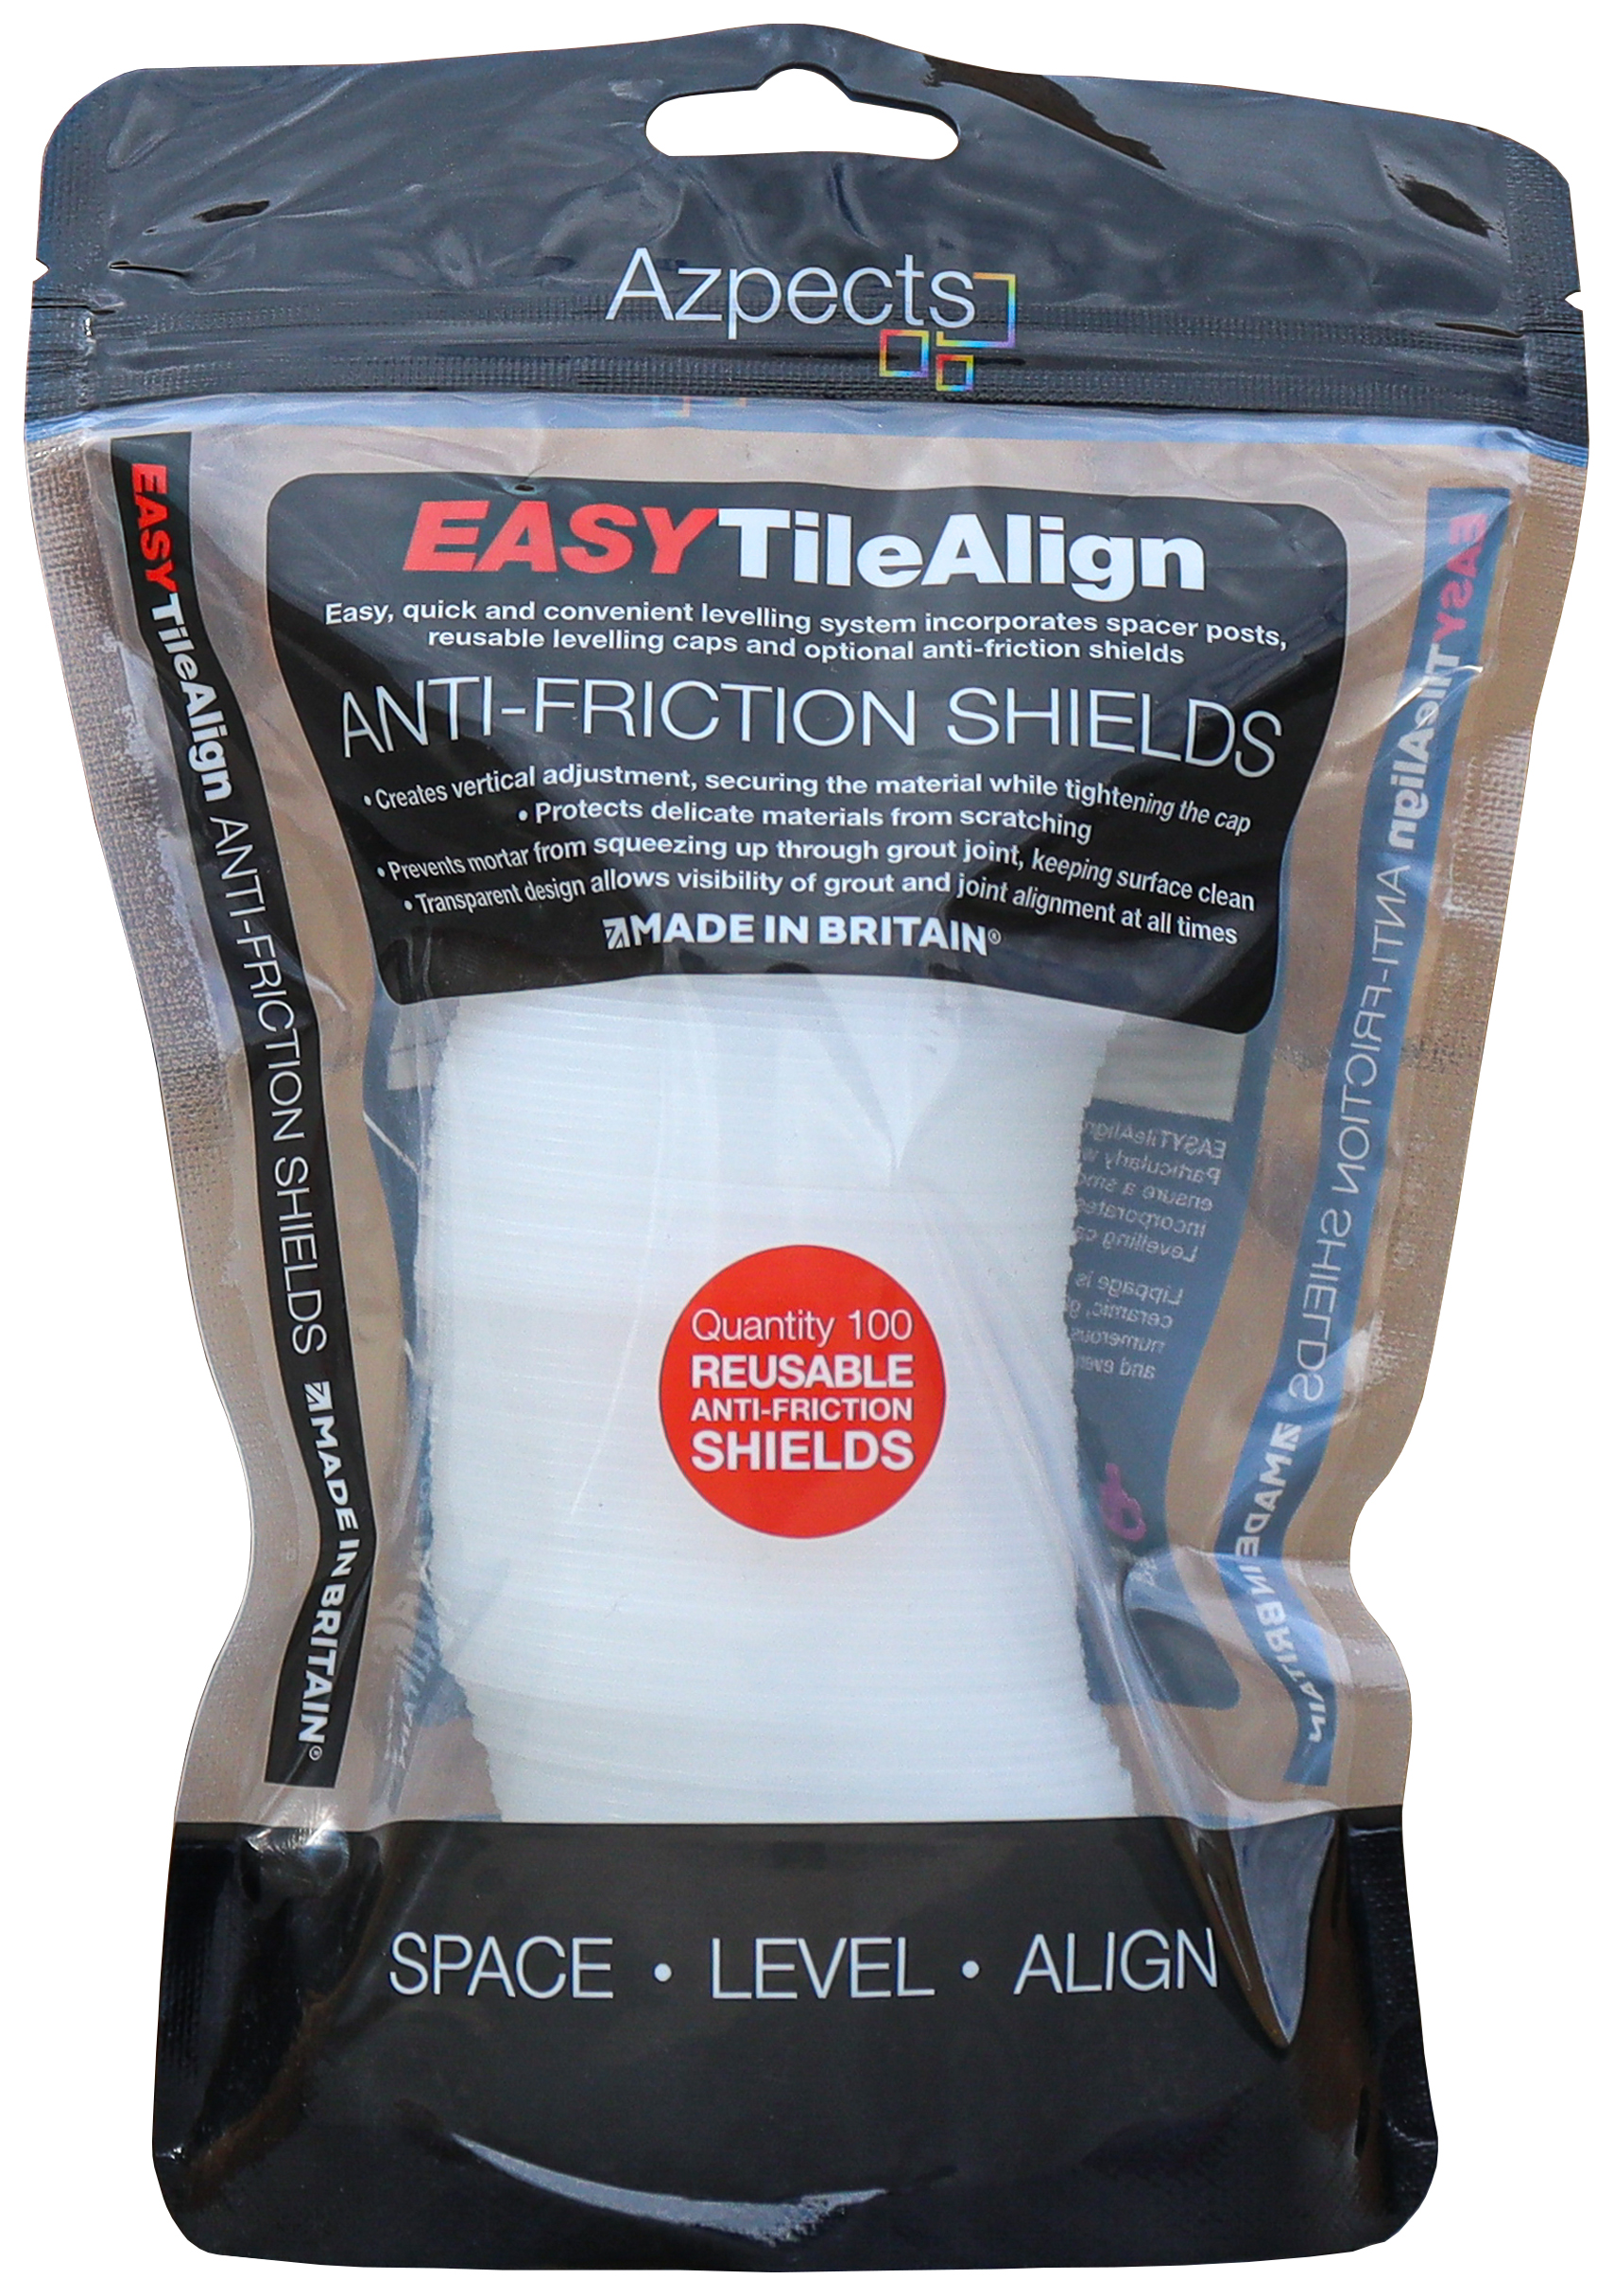 Easy Tile Align Anti-Friction Shields - Pack of 100